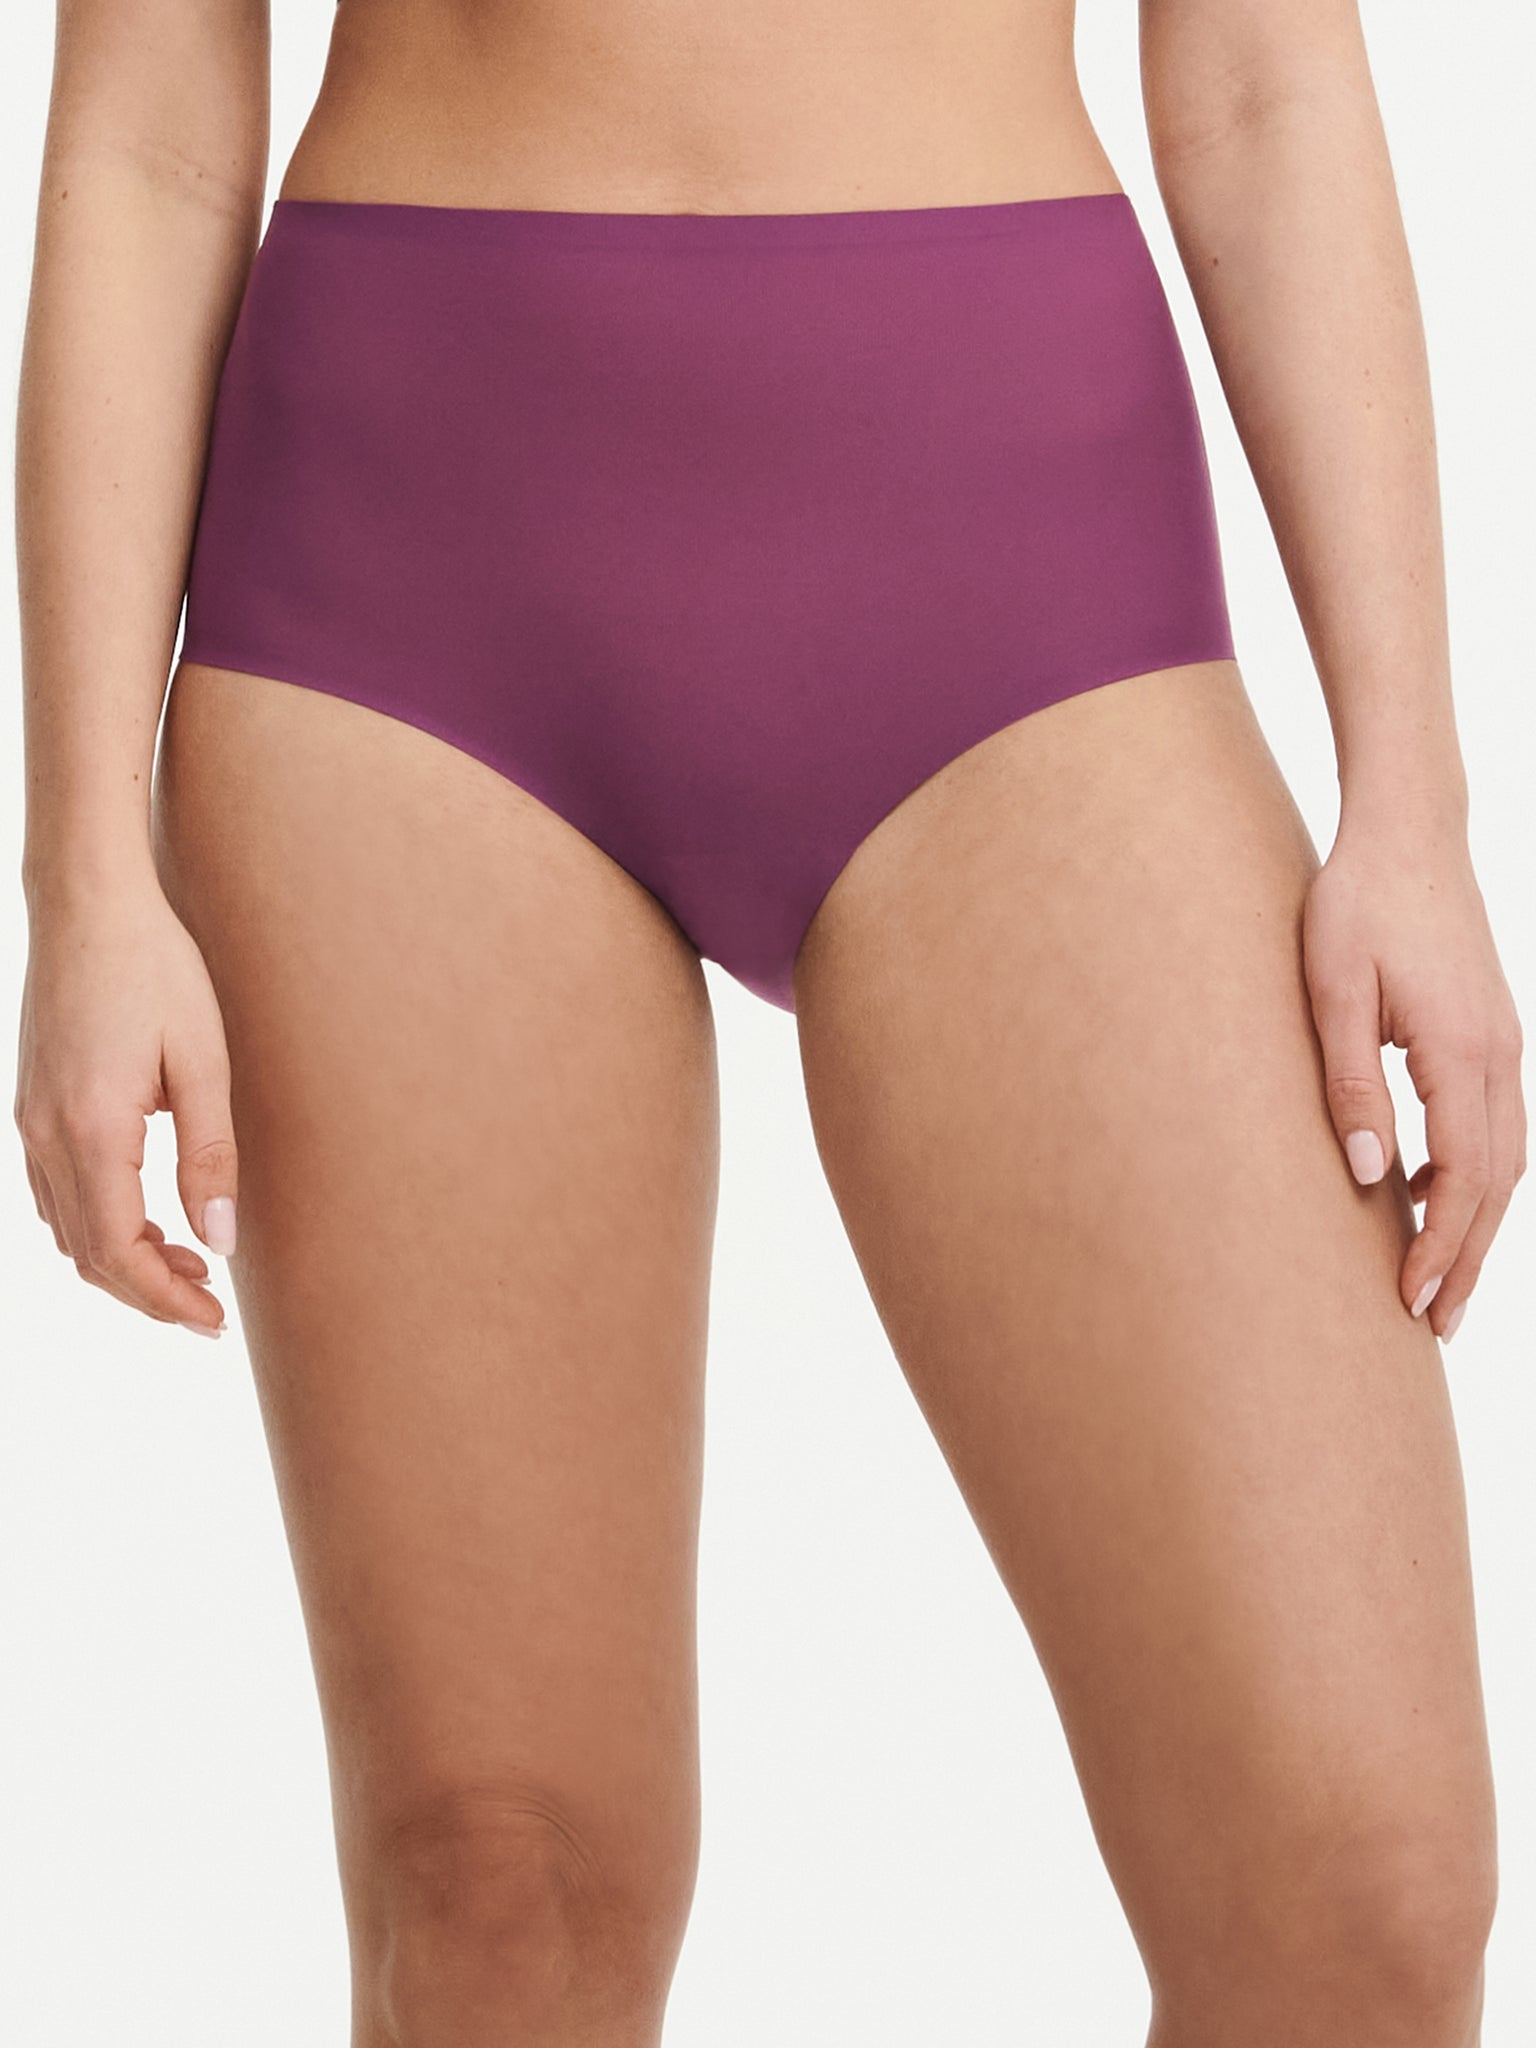 Comfy Nylon Panties Unisex Men Women Underwear Soft Knickers Panty Set Of 6  12 - Helia Beer Co